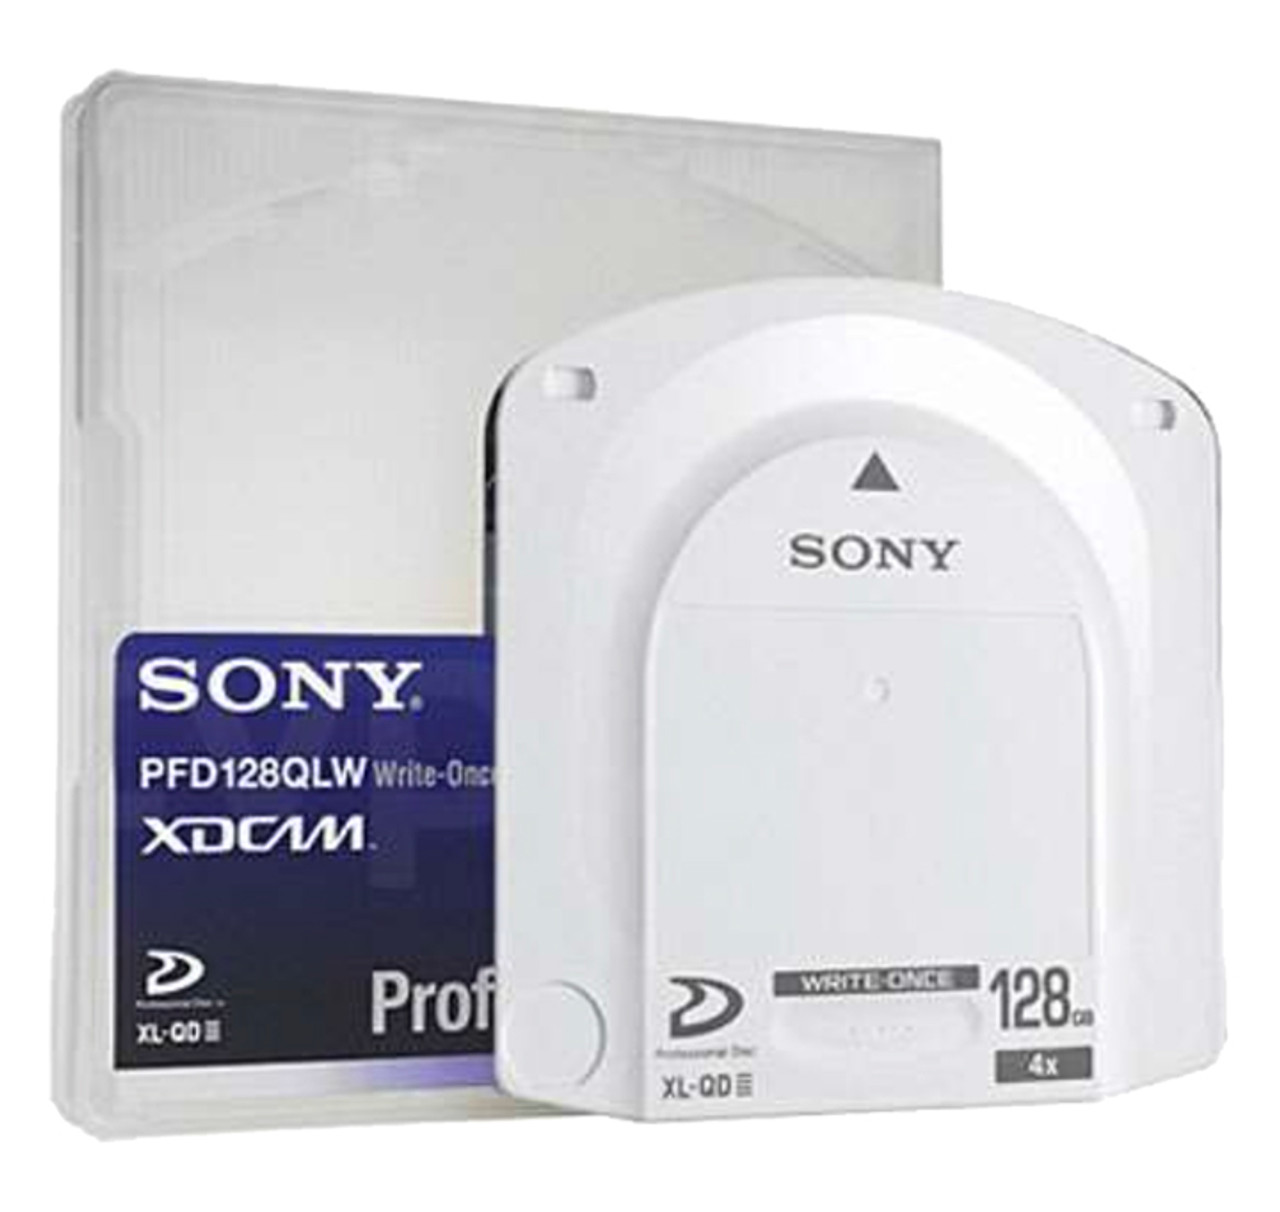 Sony PFD128QLW 128 GB Quad-Layer XDCAM Professional Disc